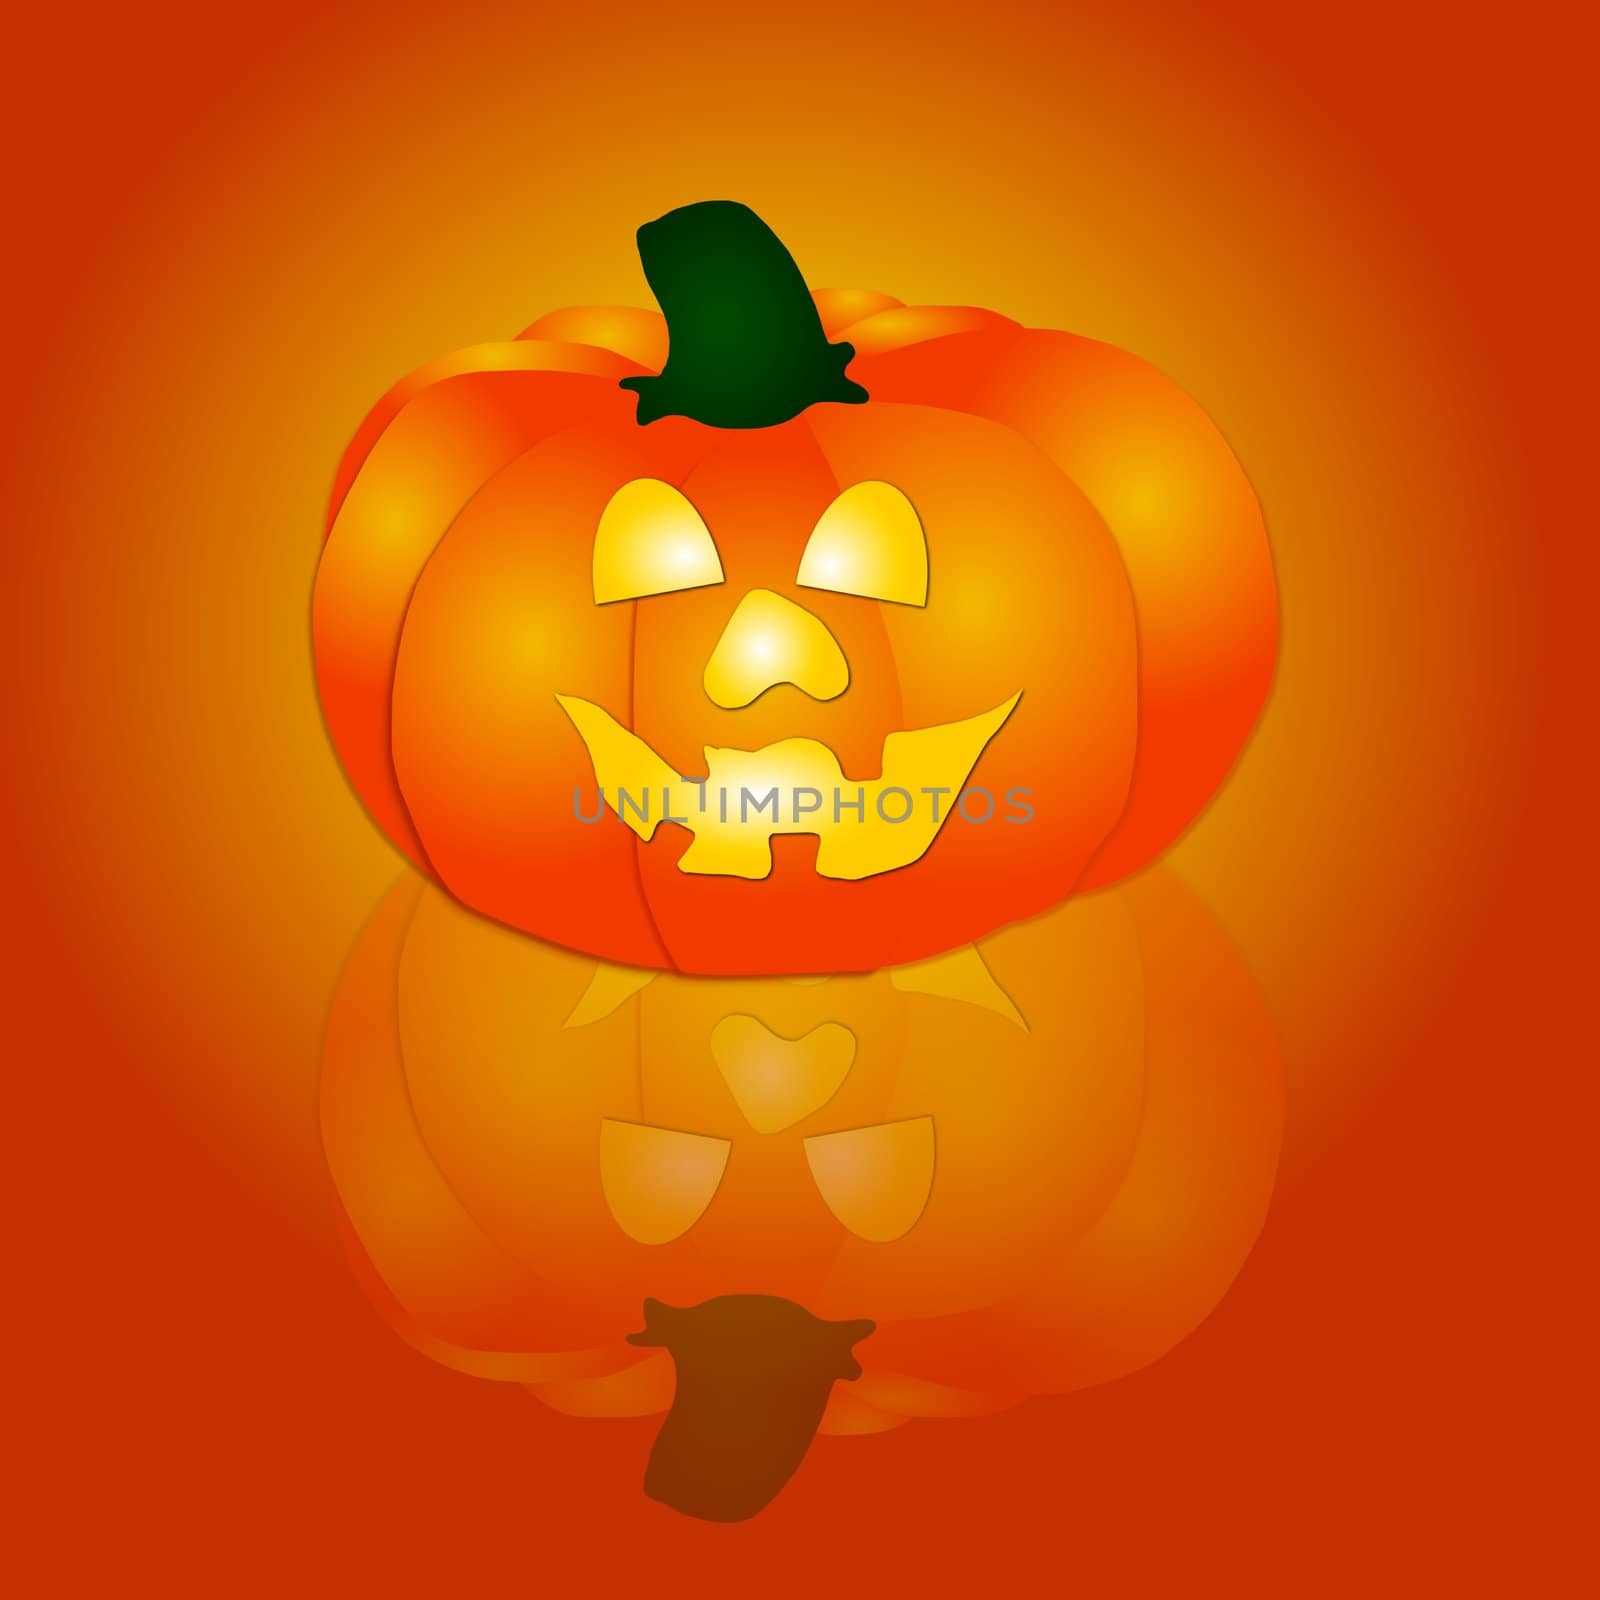  Halloween Pumpkin by peromarketing